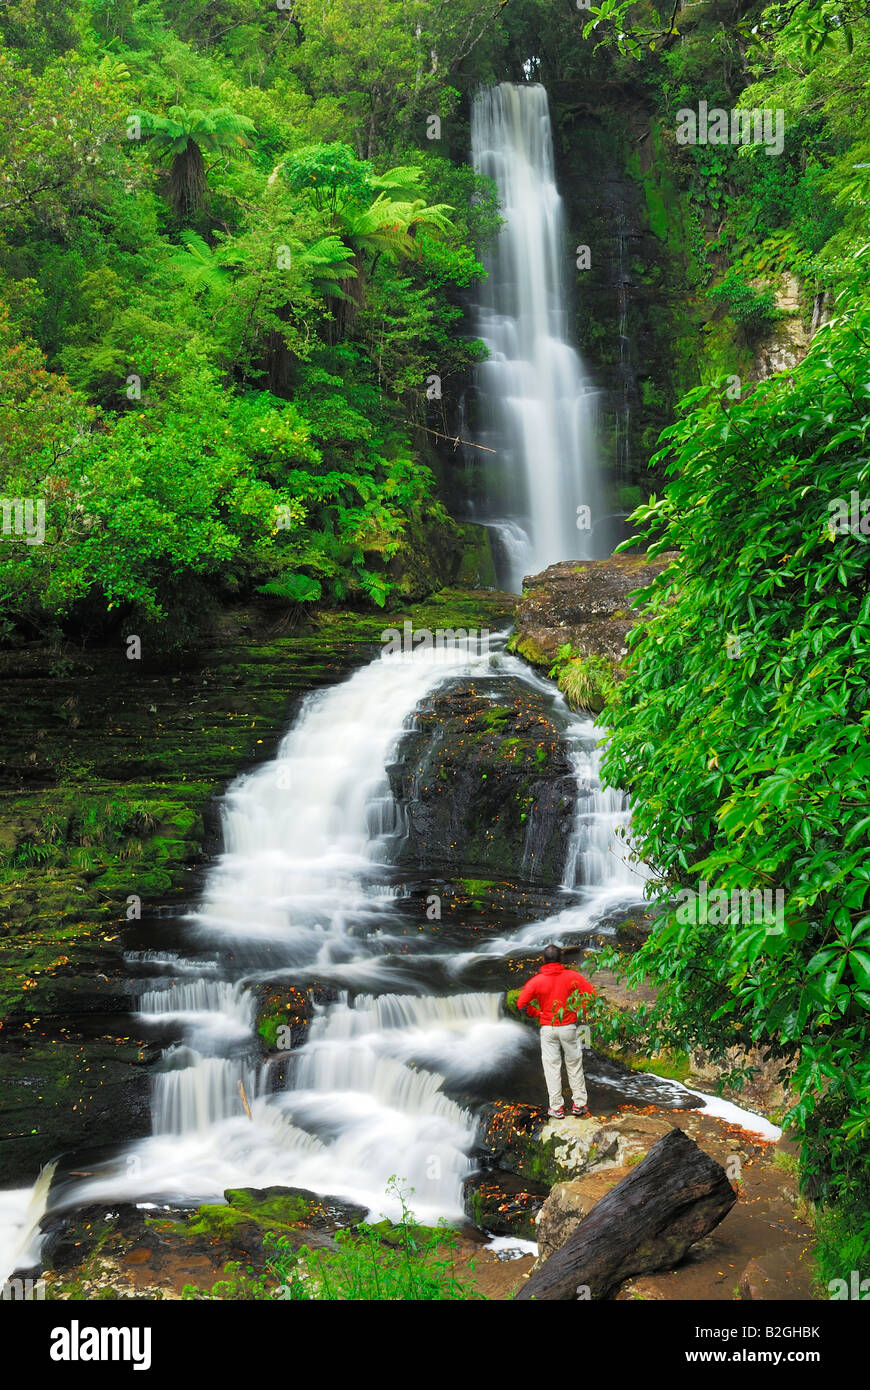 man-mac-lean-falls-river-mountain-torrent-cascade-forest-jungle-south-B2GHBK.jpg